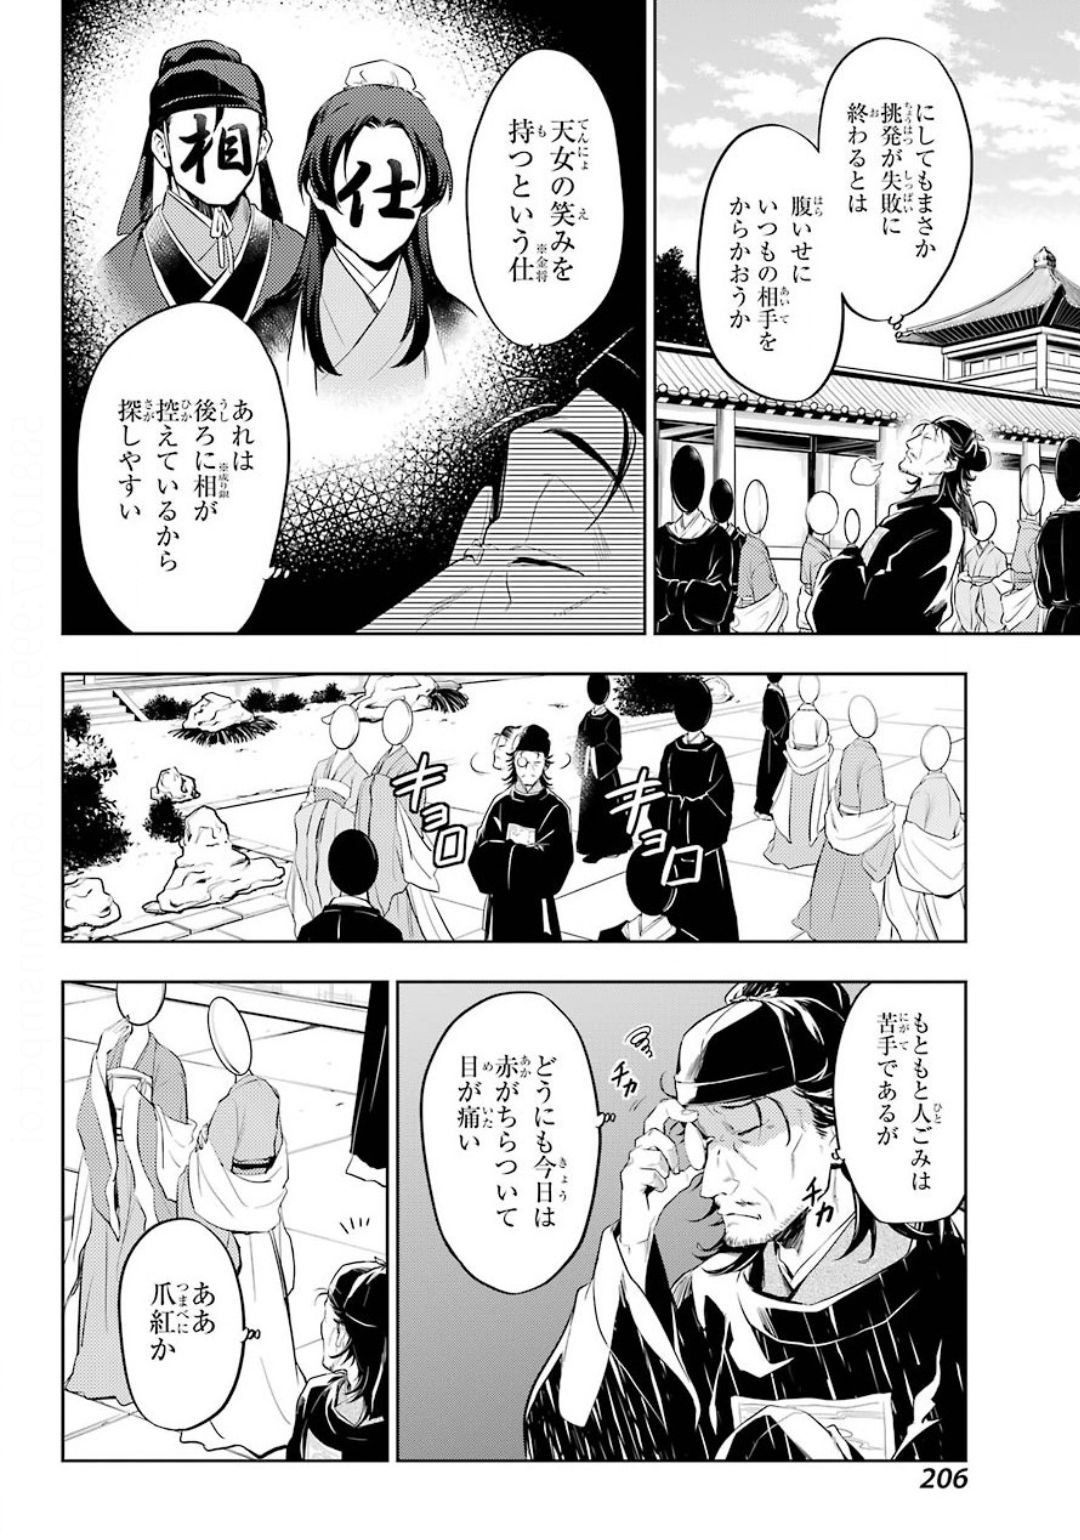 Kusuriya no Hitorigoto - Chapter 36-2 - Page 16